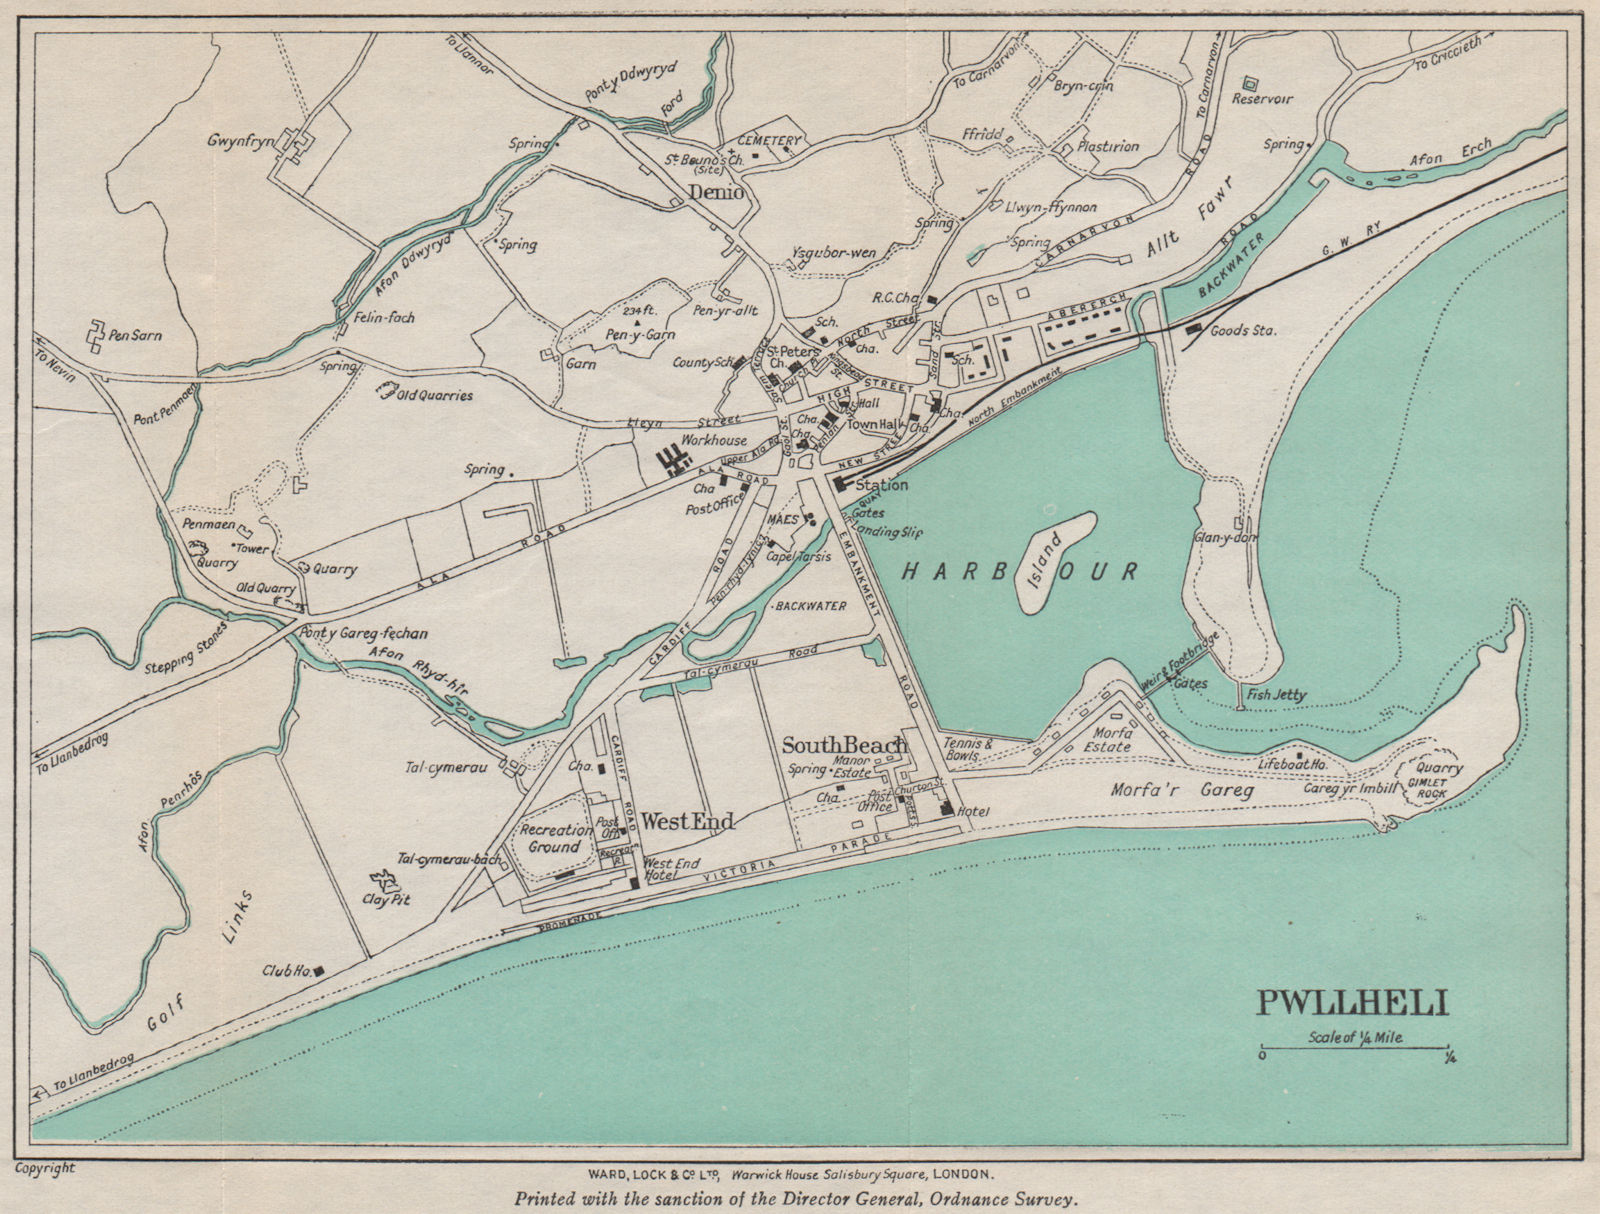 Associate Product PWLLHELI  vintage town/city plan. Wales. WARD LOCK 1948 old vintage map chart